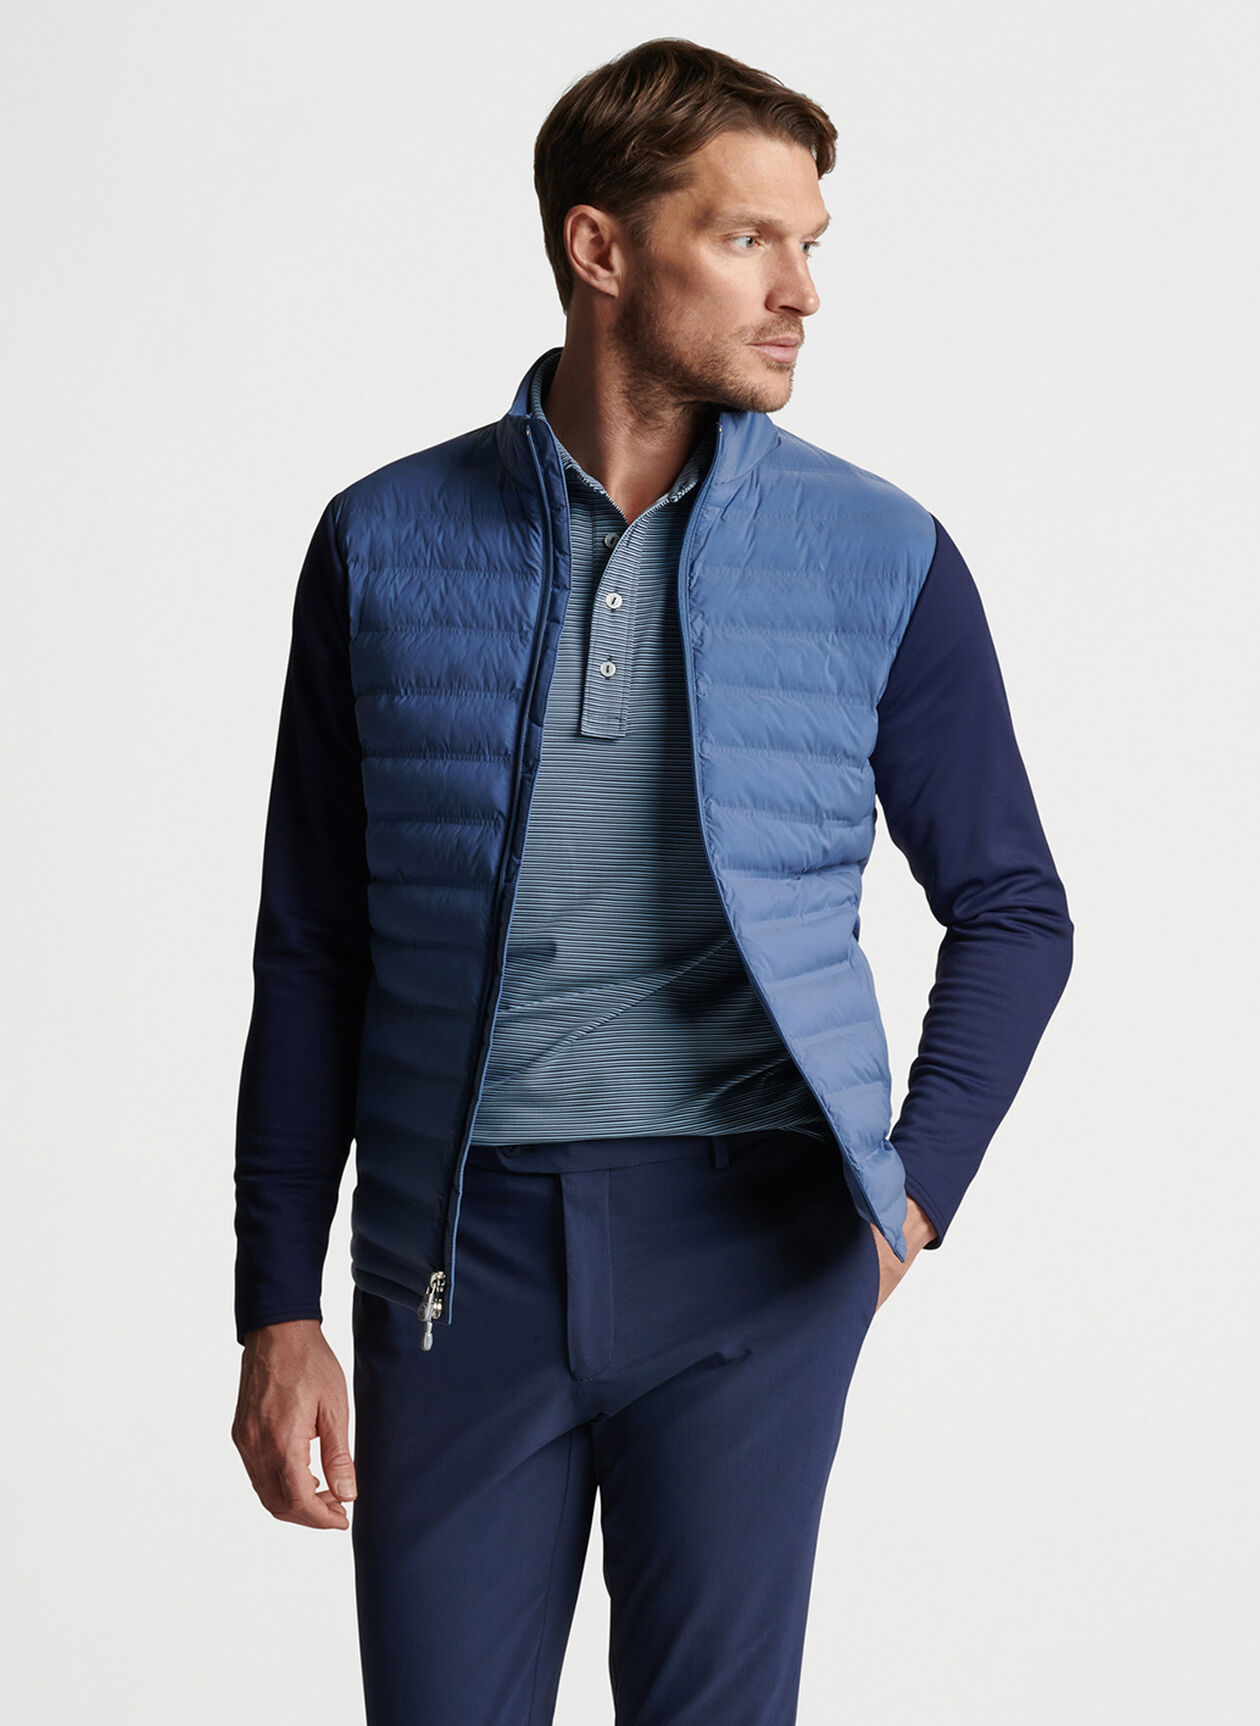 Stitchless Baffle Hybrid Jacket | Men's Jacket's & Coats | Peter Millar